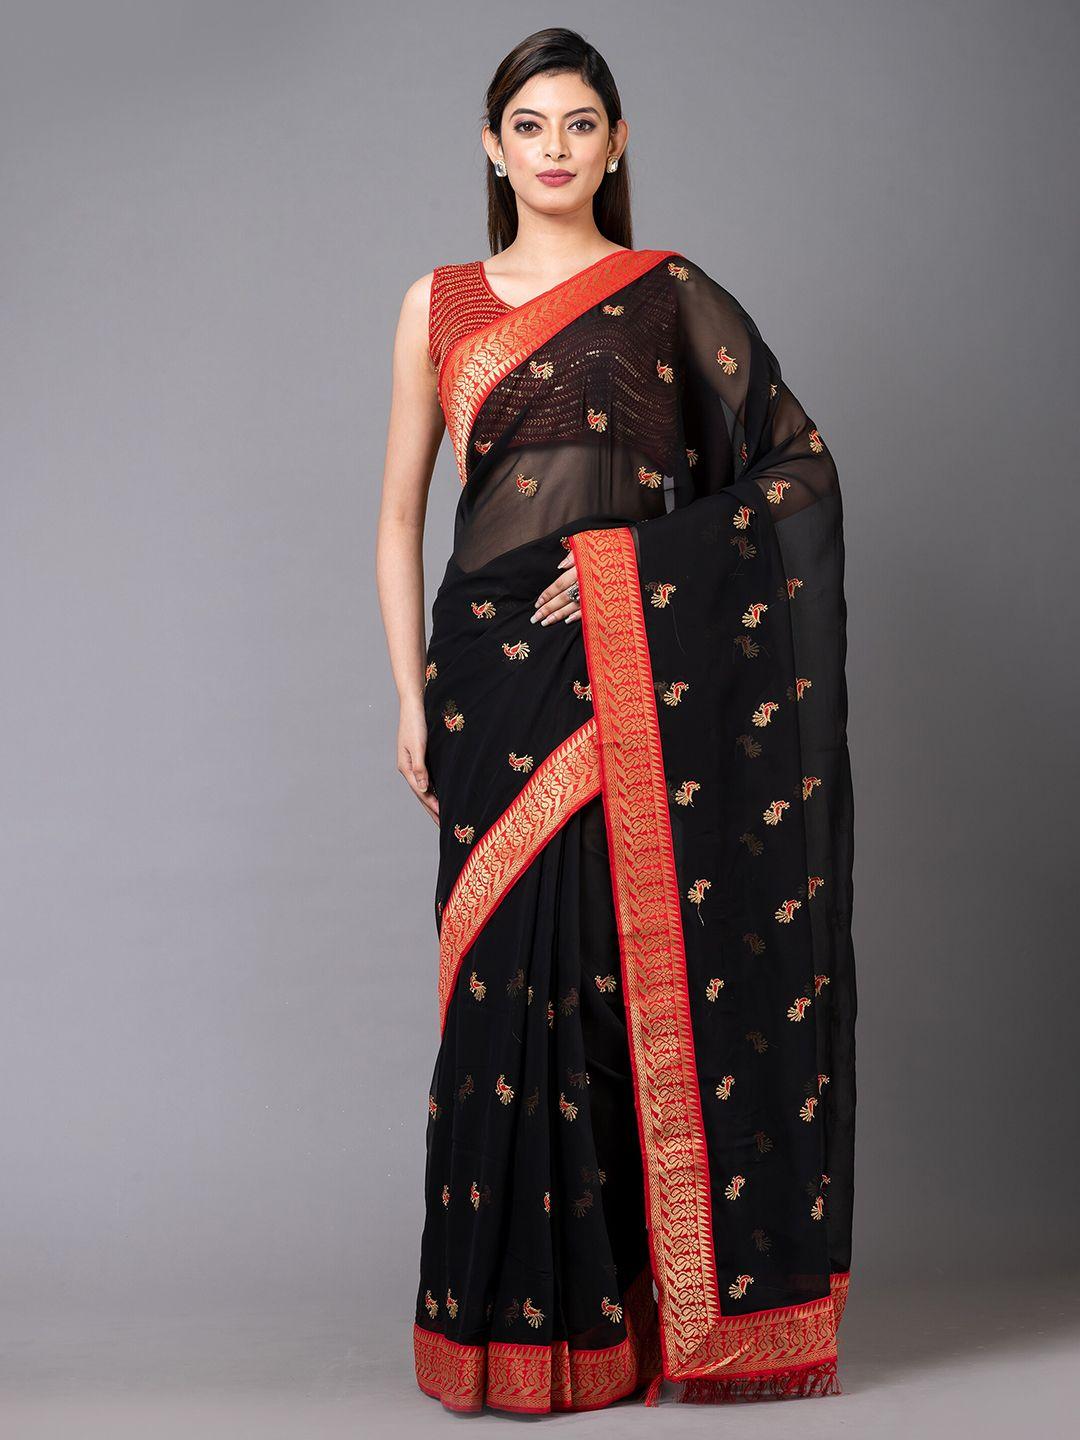 mahalasa black embellished embroidered pure chiffon saree